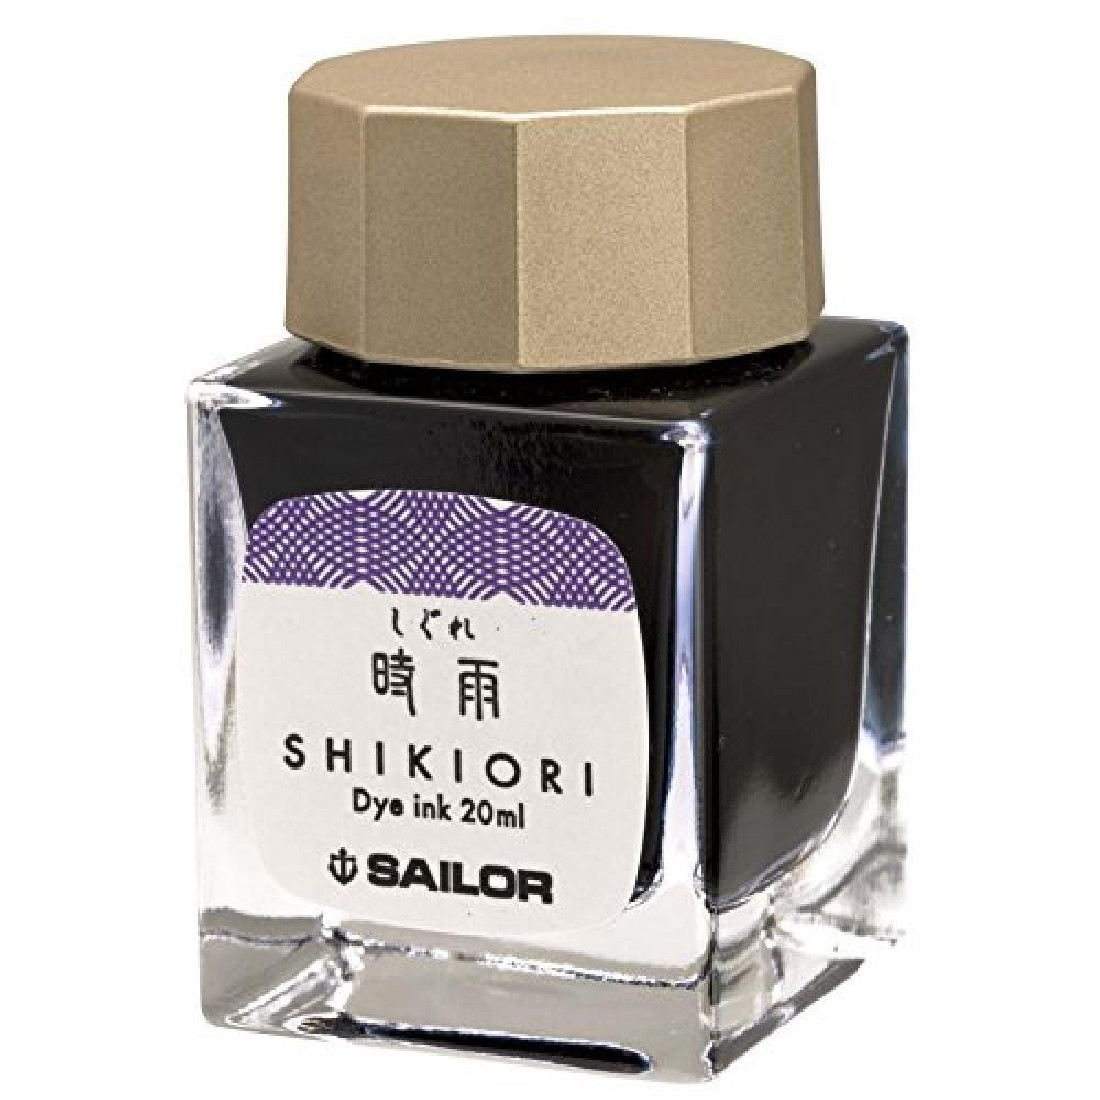 Sailor Shigure 20ml Dye ink 13-1008-201